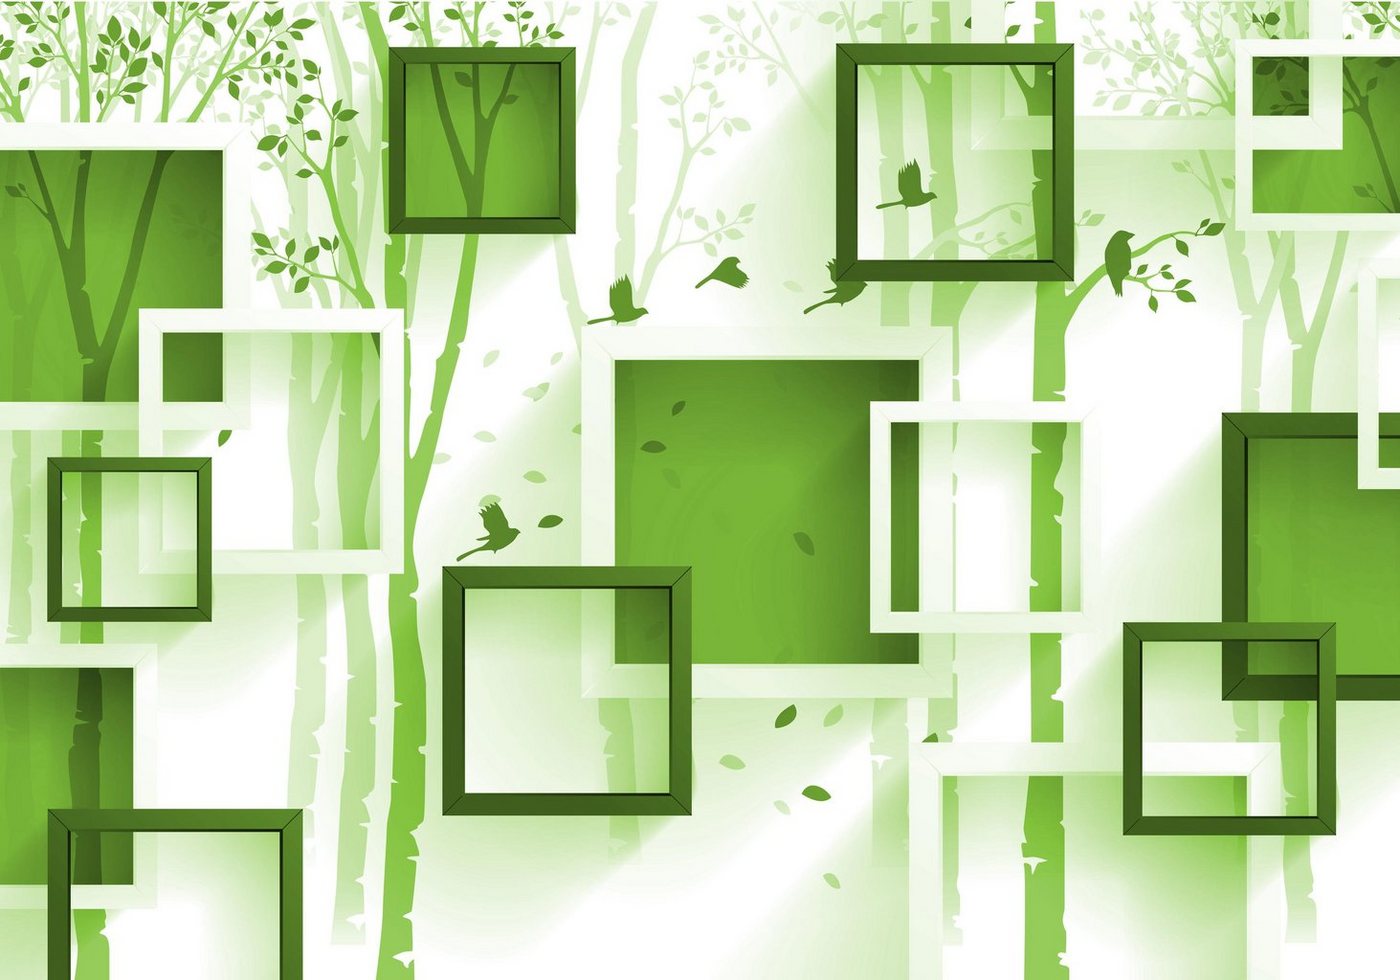 wandmotiv24 Fototapete Grün Abstrakt Fenster Wald Vögel, strukturiert, Wandtapete, Motivtapete, matt, Vinyltapete, selbstklebend von wandmotiv24